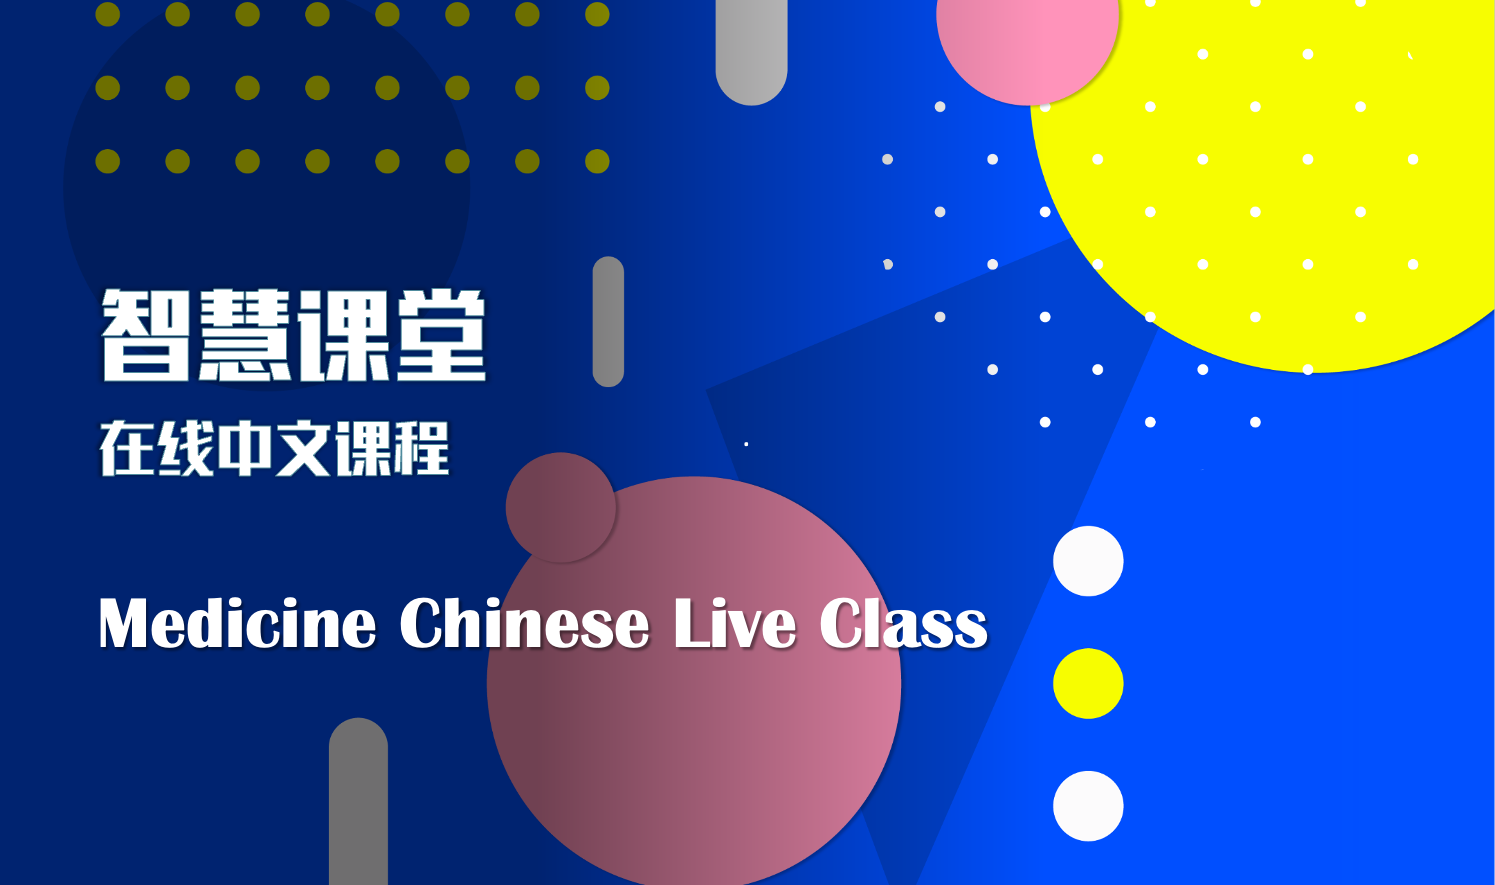 Medicine Chinese Live Class